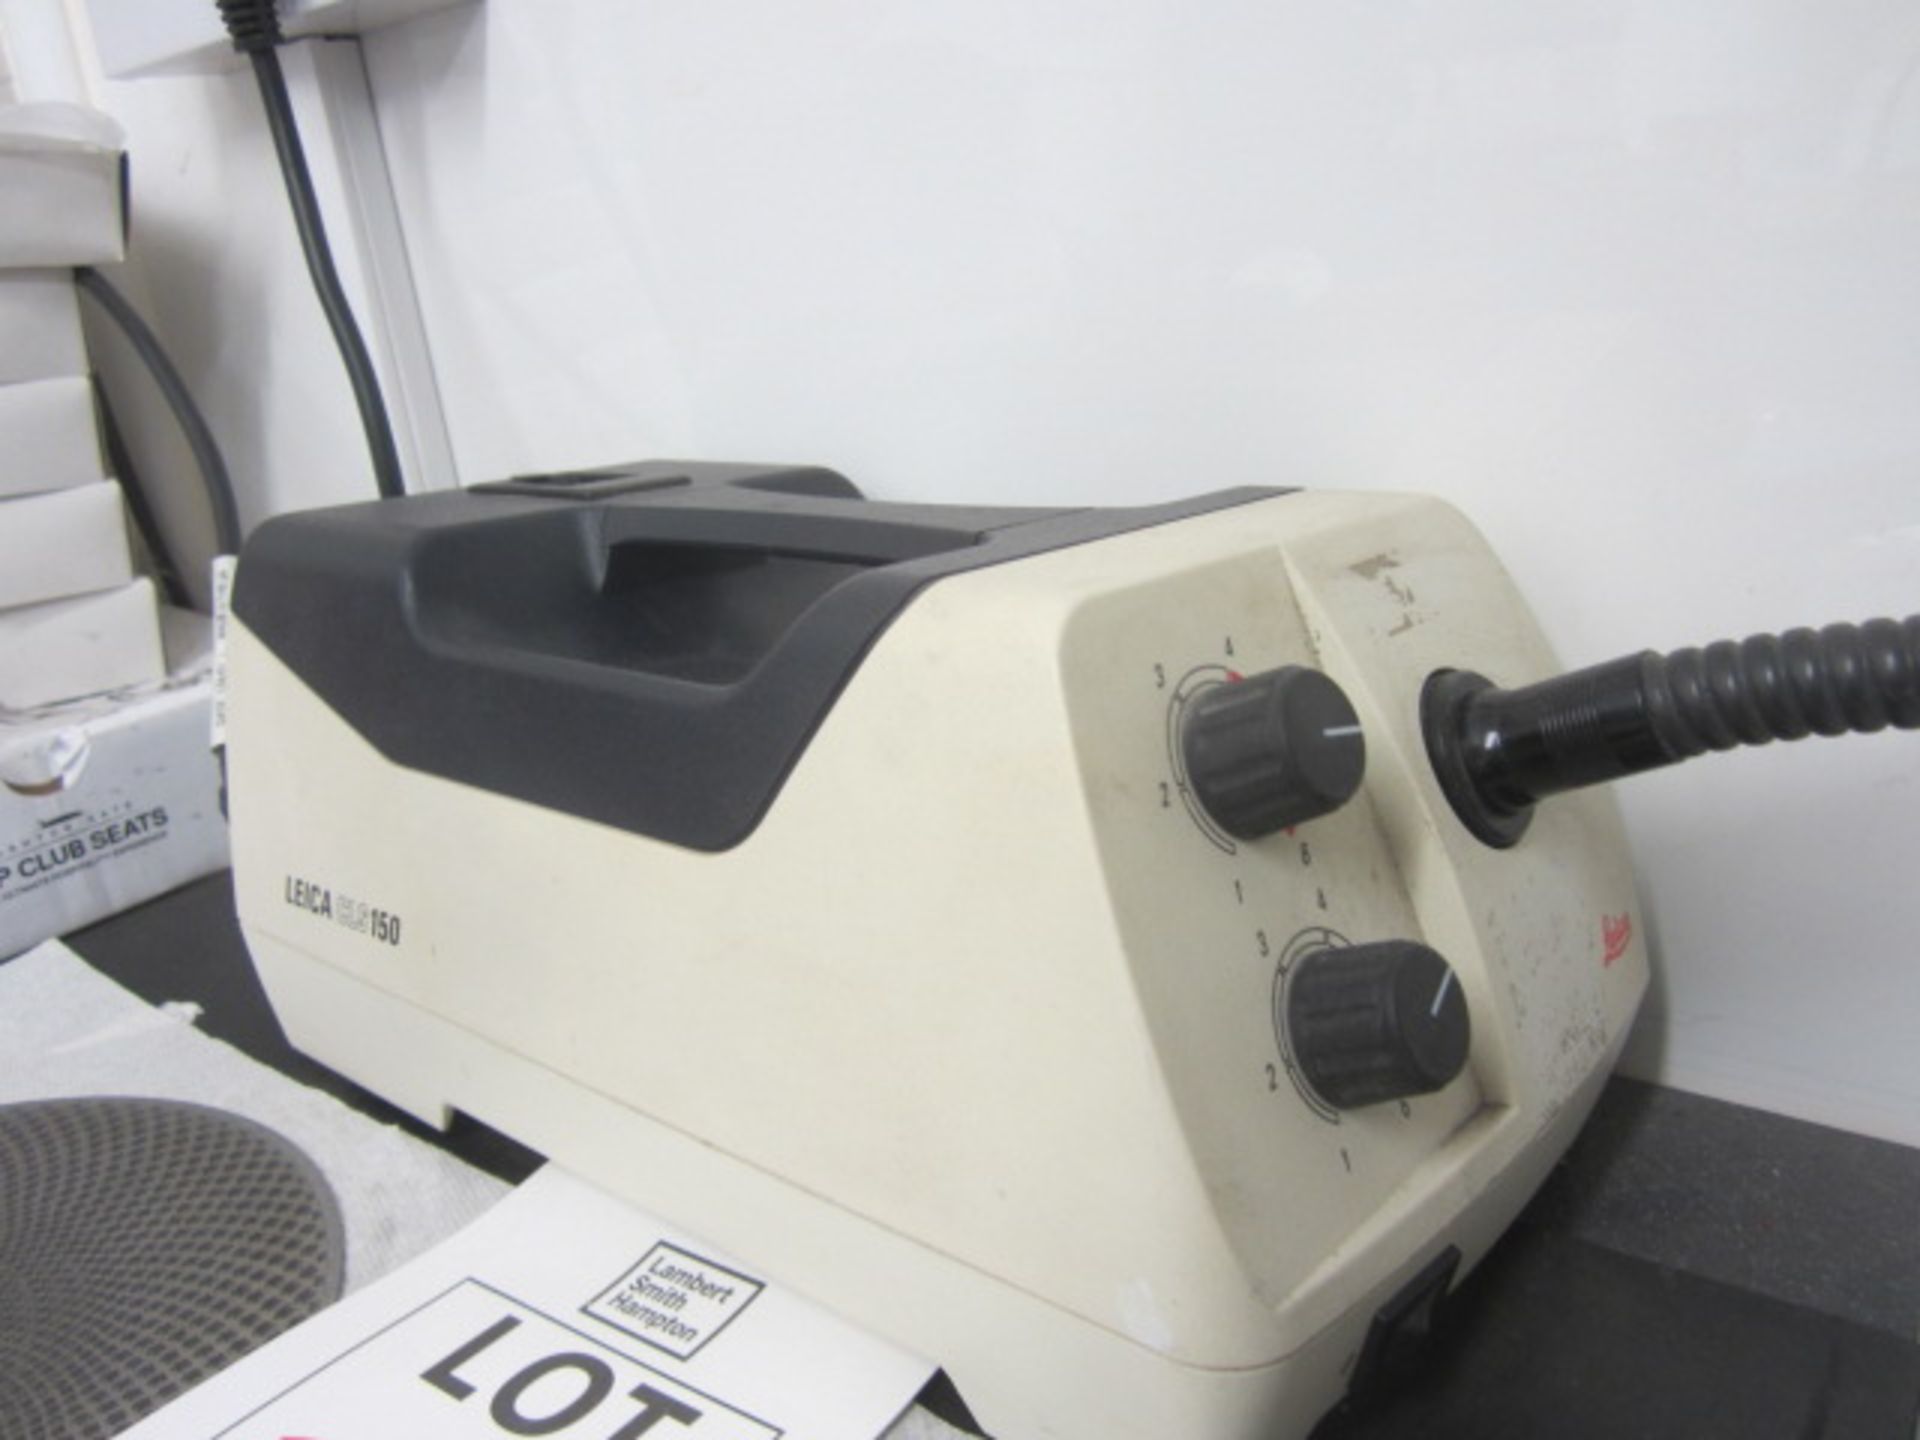 Leica MZ6 microscope with a Leica GLS 150 light source - Bild 3 aus 3